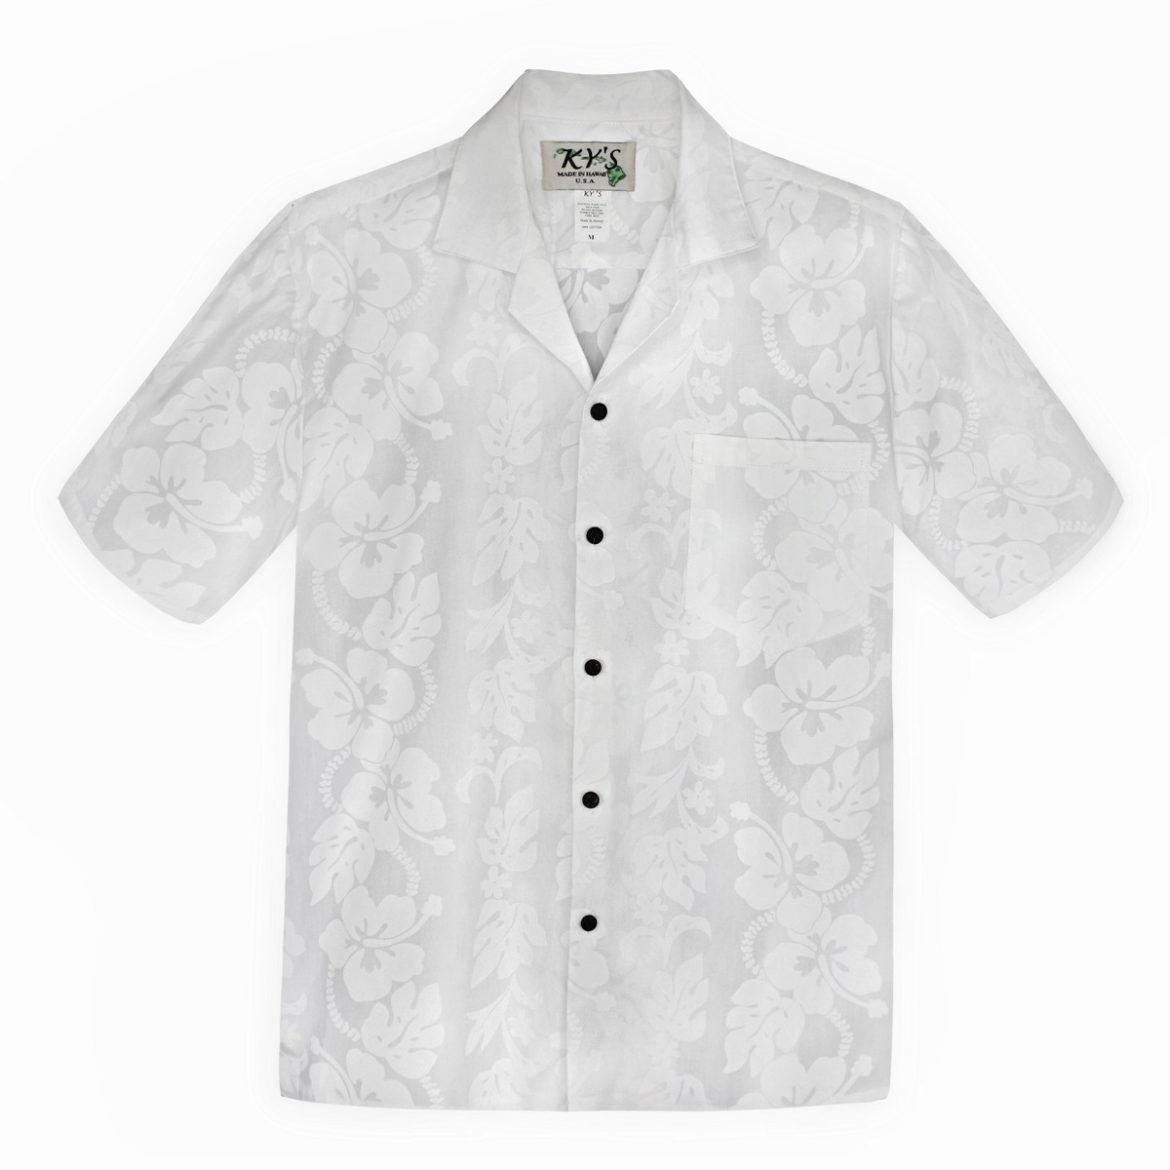 Mens hawaiianShirt - Tropical Bliss - White on White